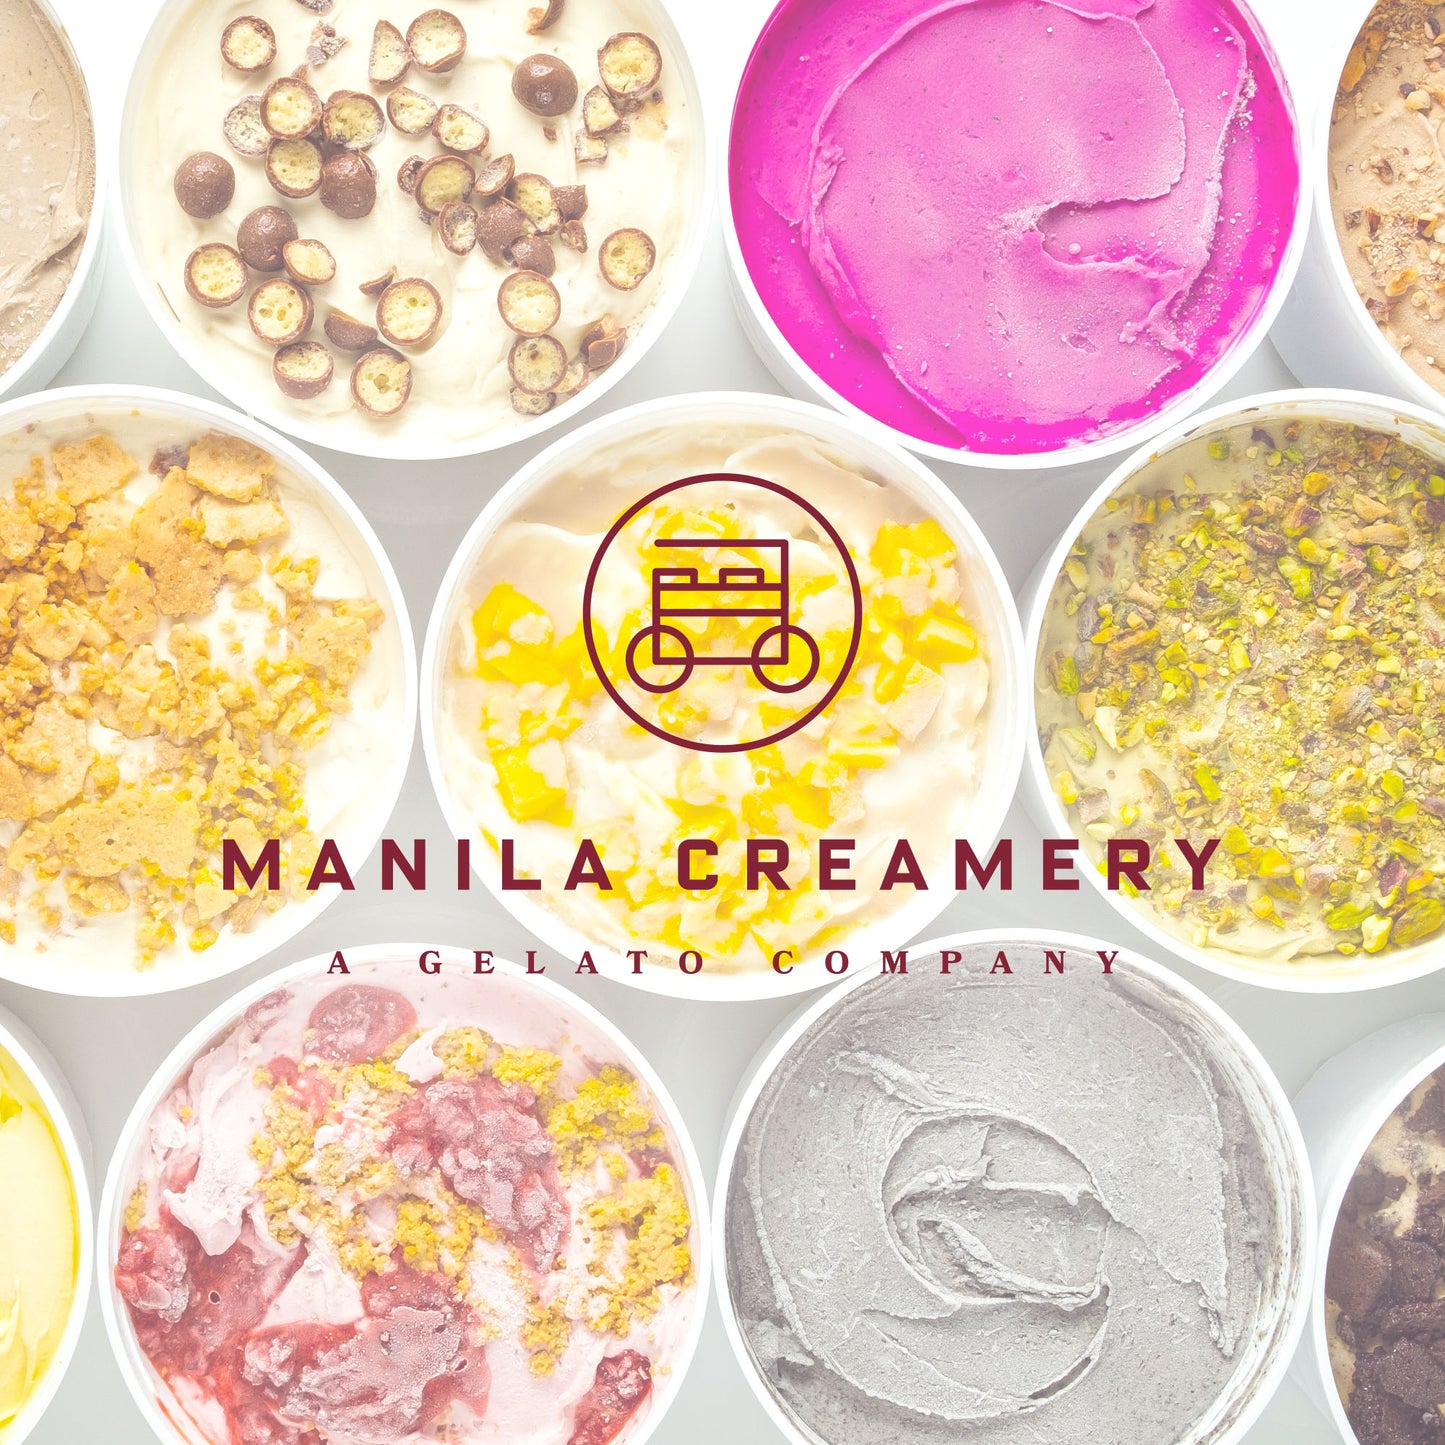 Manila Creamery Gelato